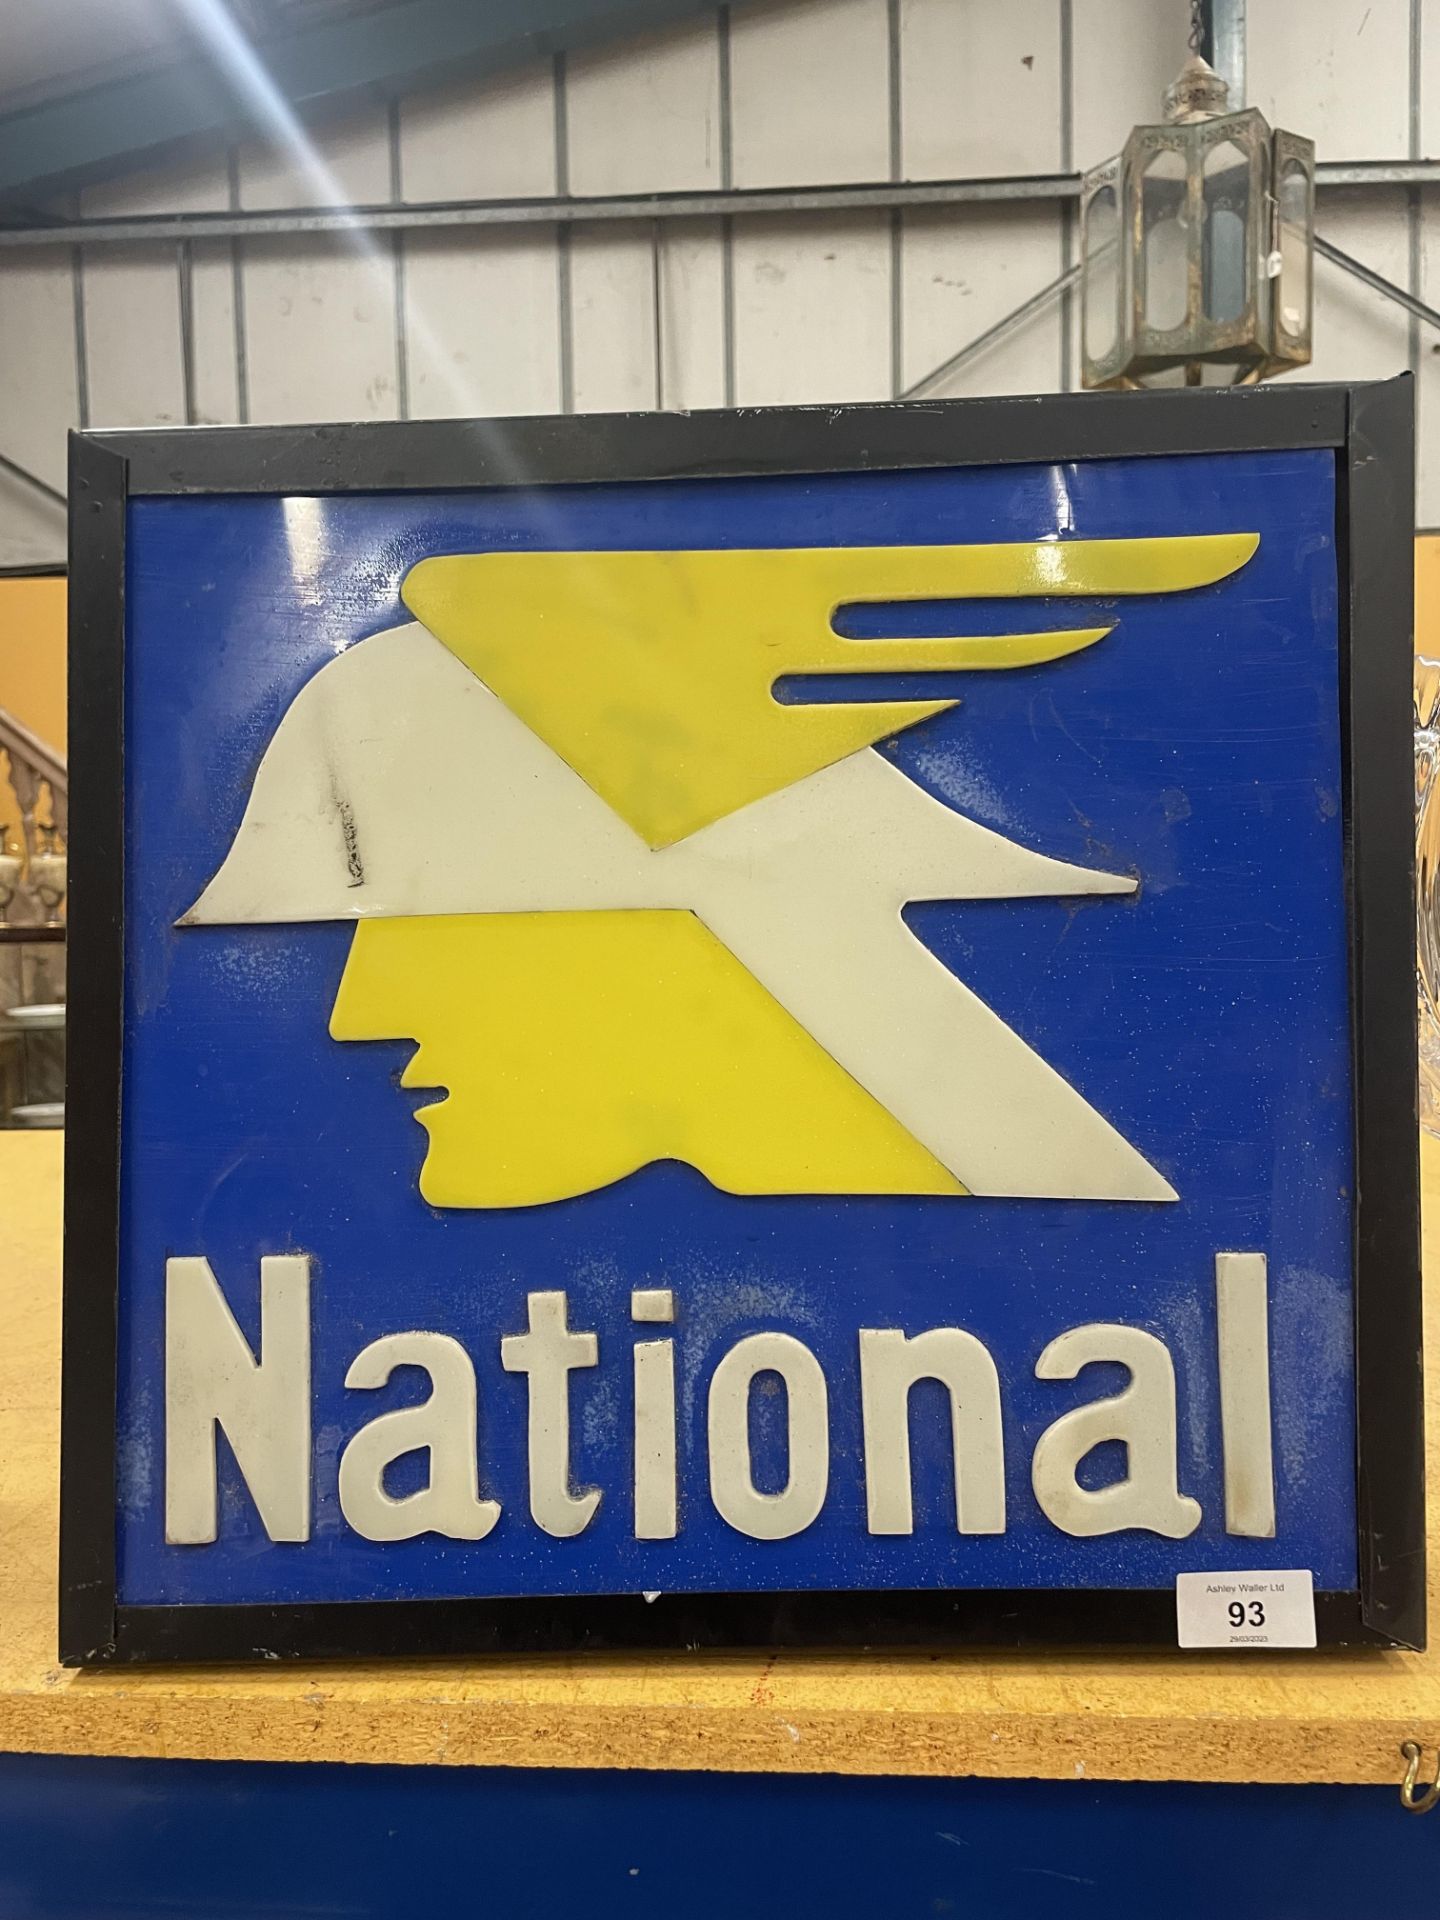 A NATIONAL ILLUMINATED BOX SIGN